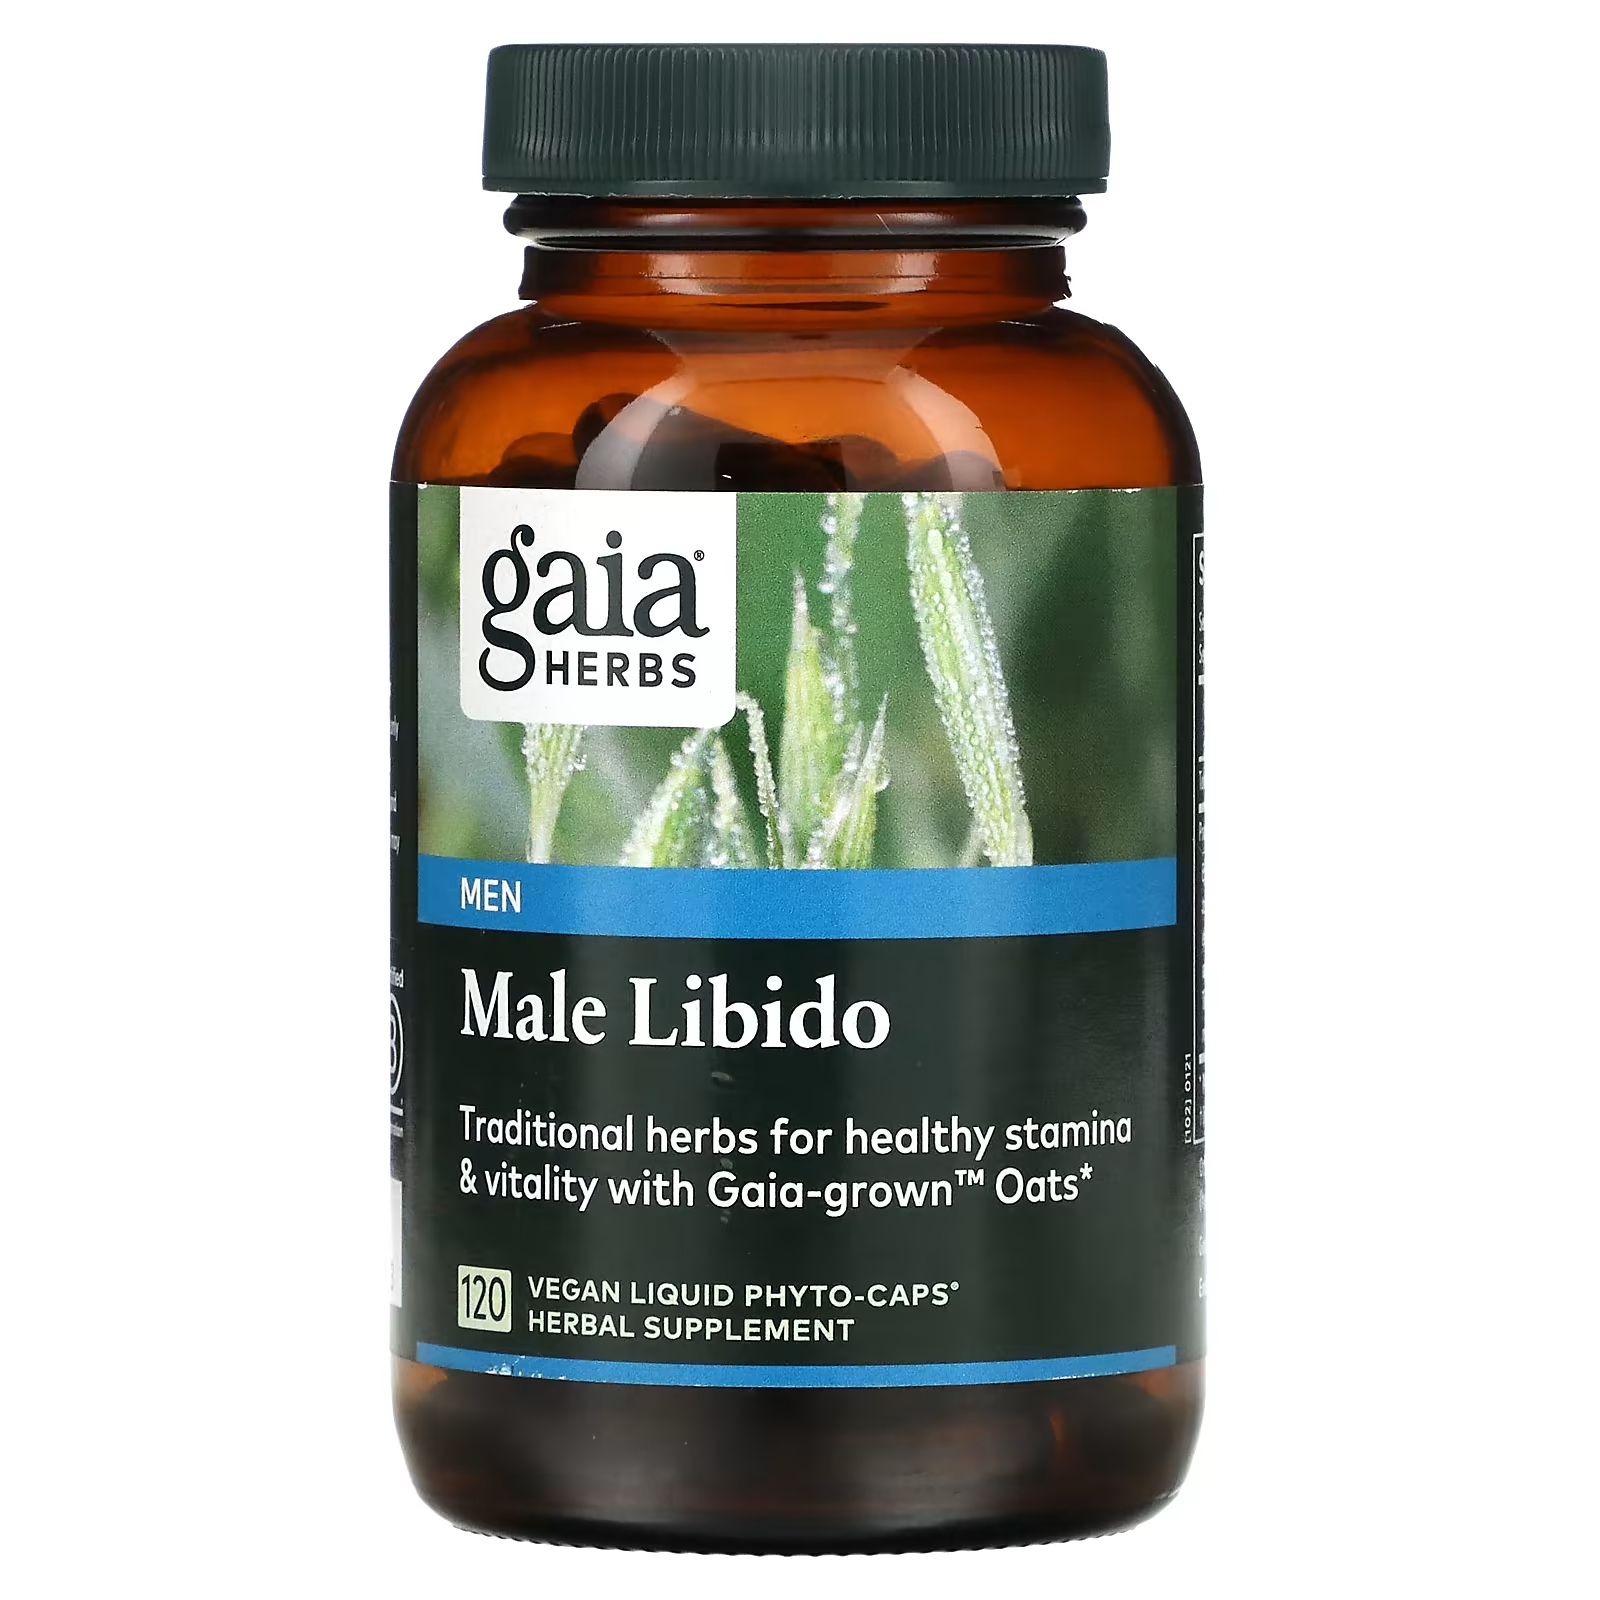 Травяная добавка Gaia Herbs Male Libido, 120 жидких фито-капсул пищевая добавка gaia herbs sleepthru 120 веганских жидких фито капсул